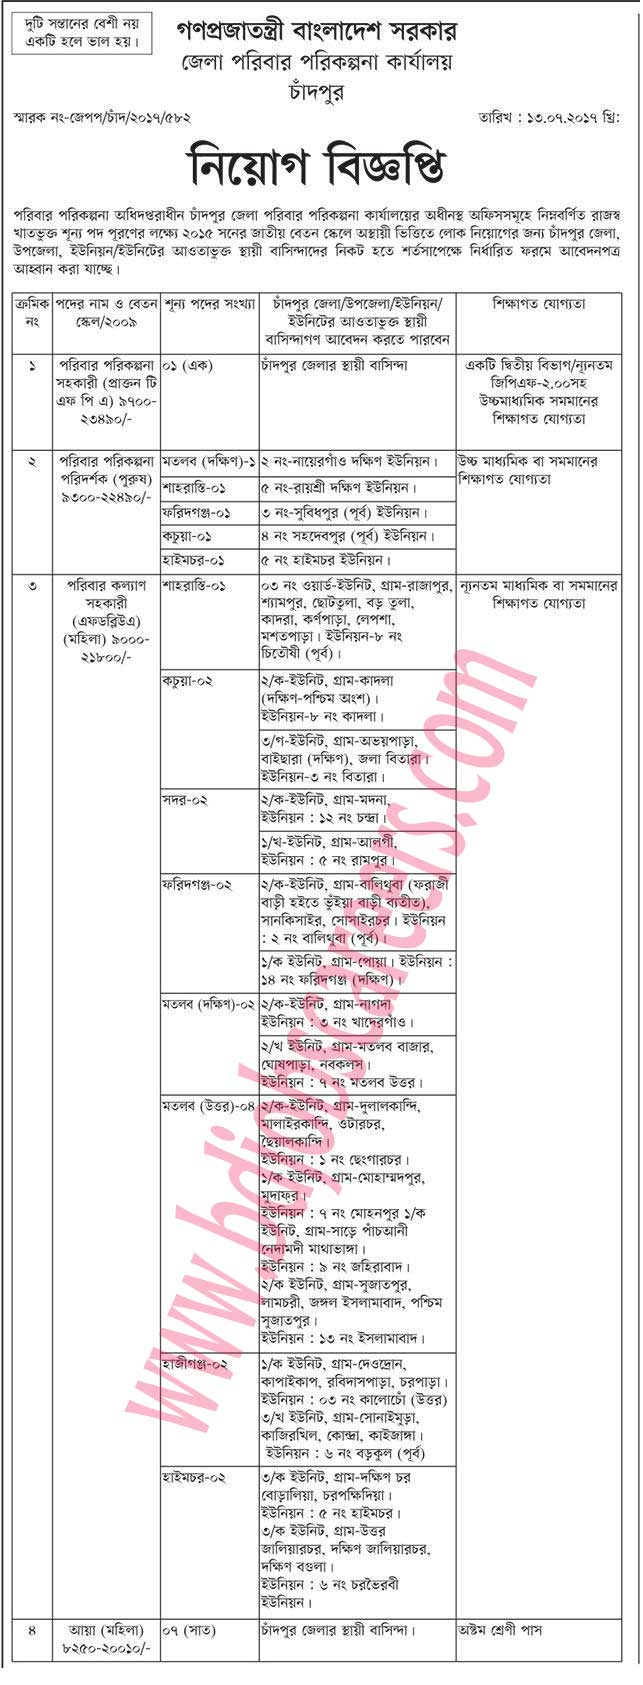 Chandpur District Family Planning Office Job Circular 2017-1